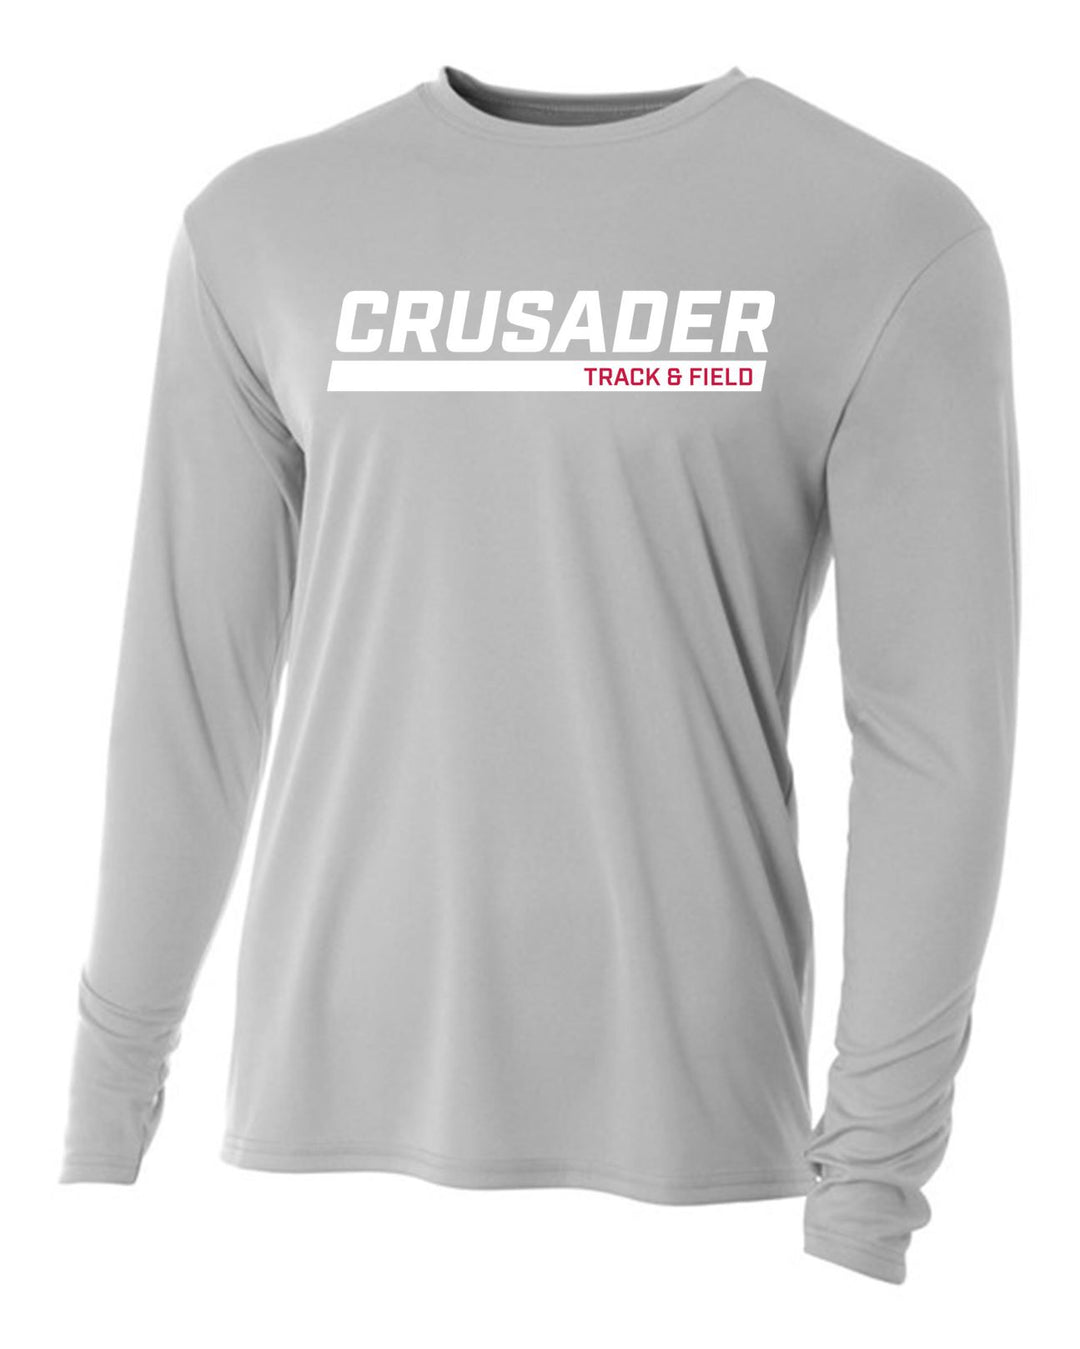 WCU Track & Field Men's Long-Sleeve Performance Shirt WCU Track & Field Silver CRUSADER - Third Coast Soccer